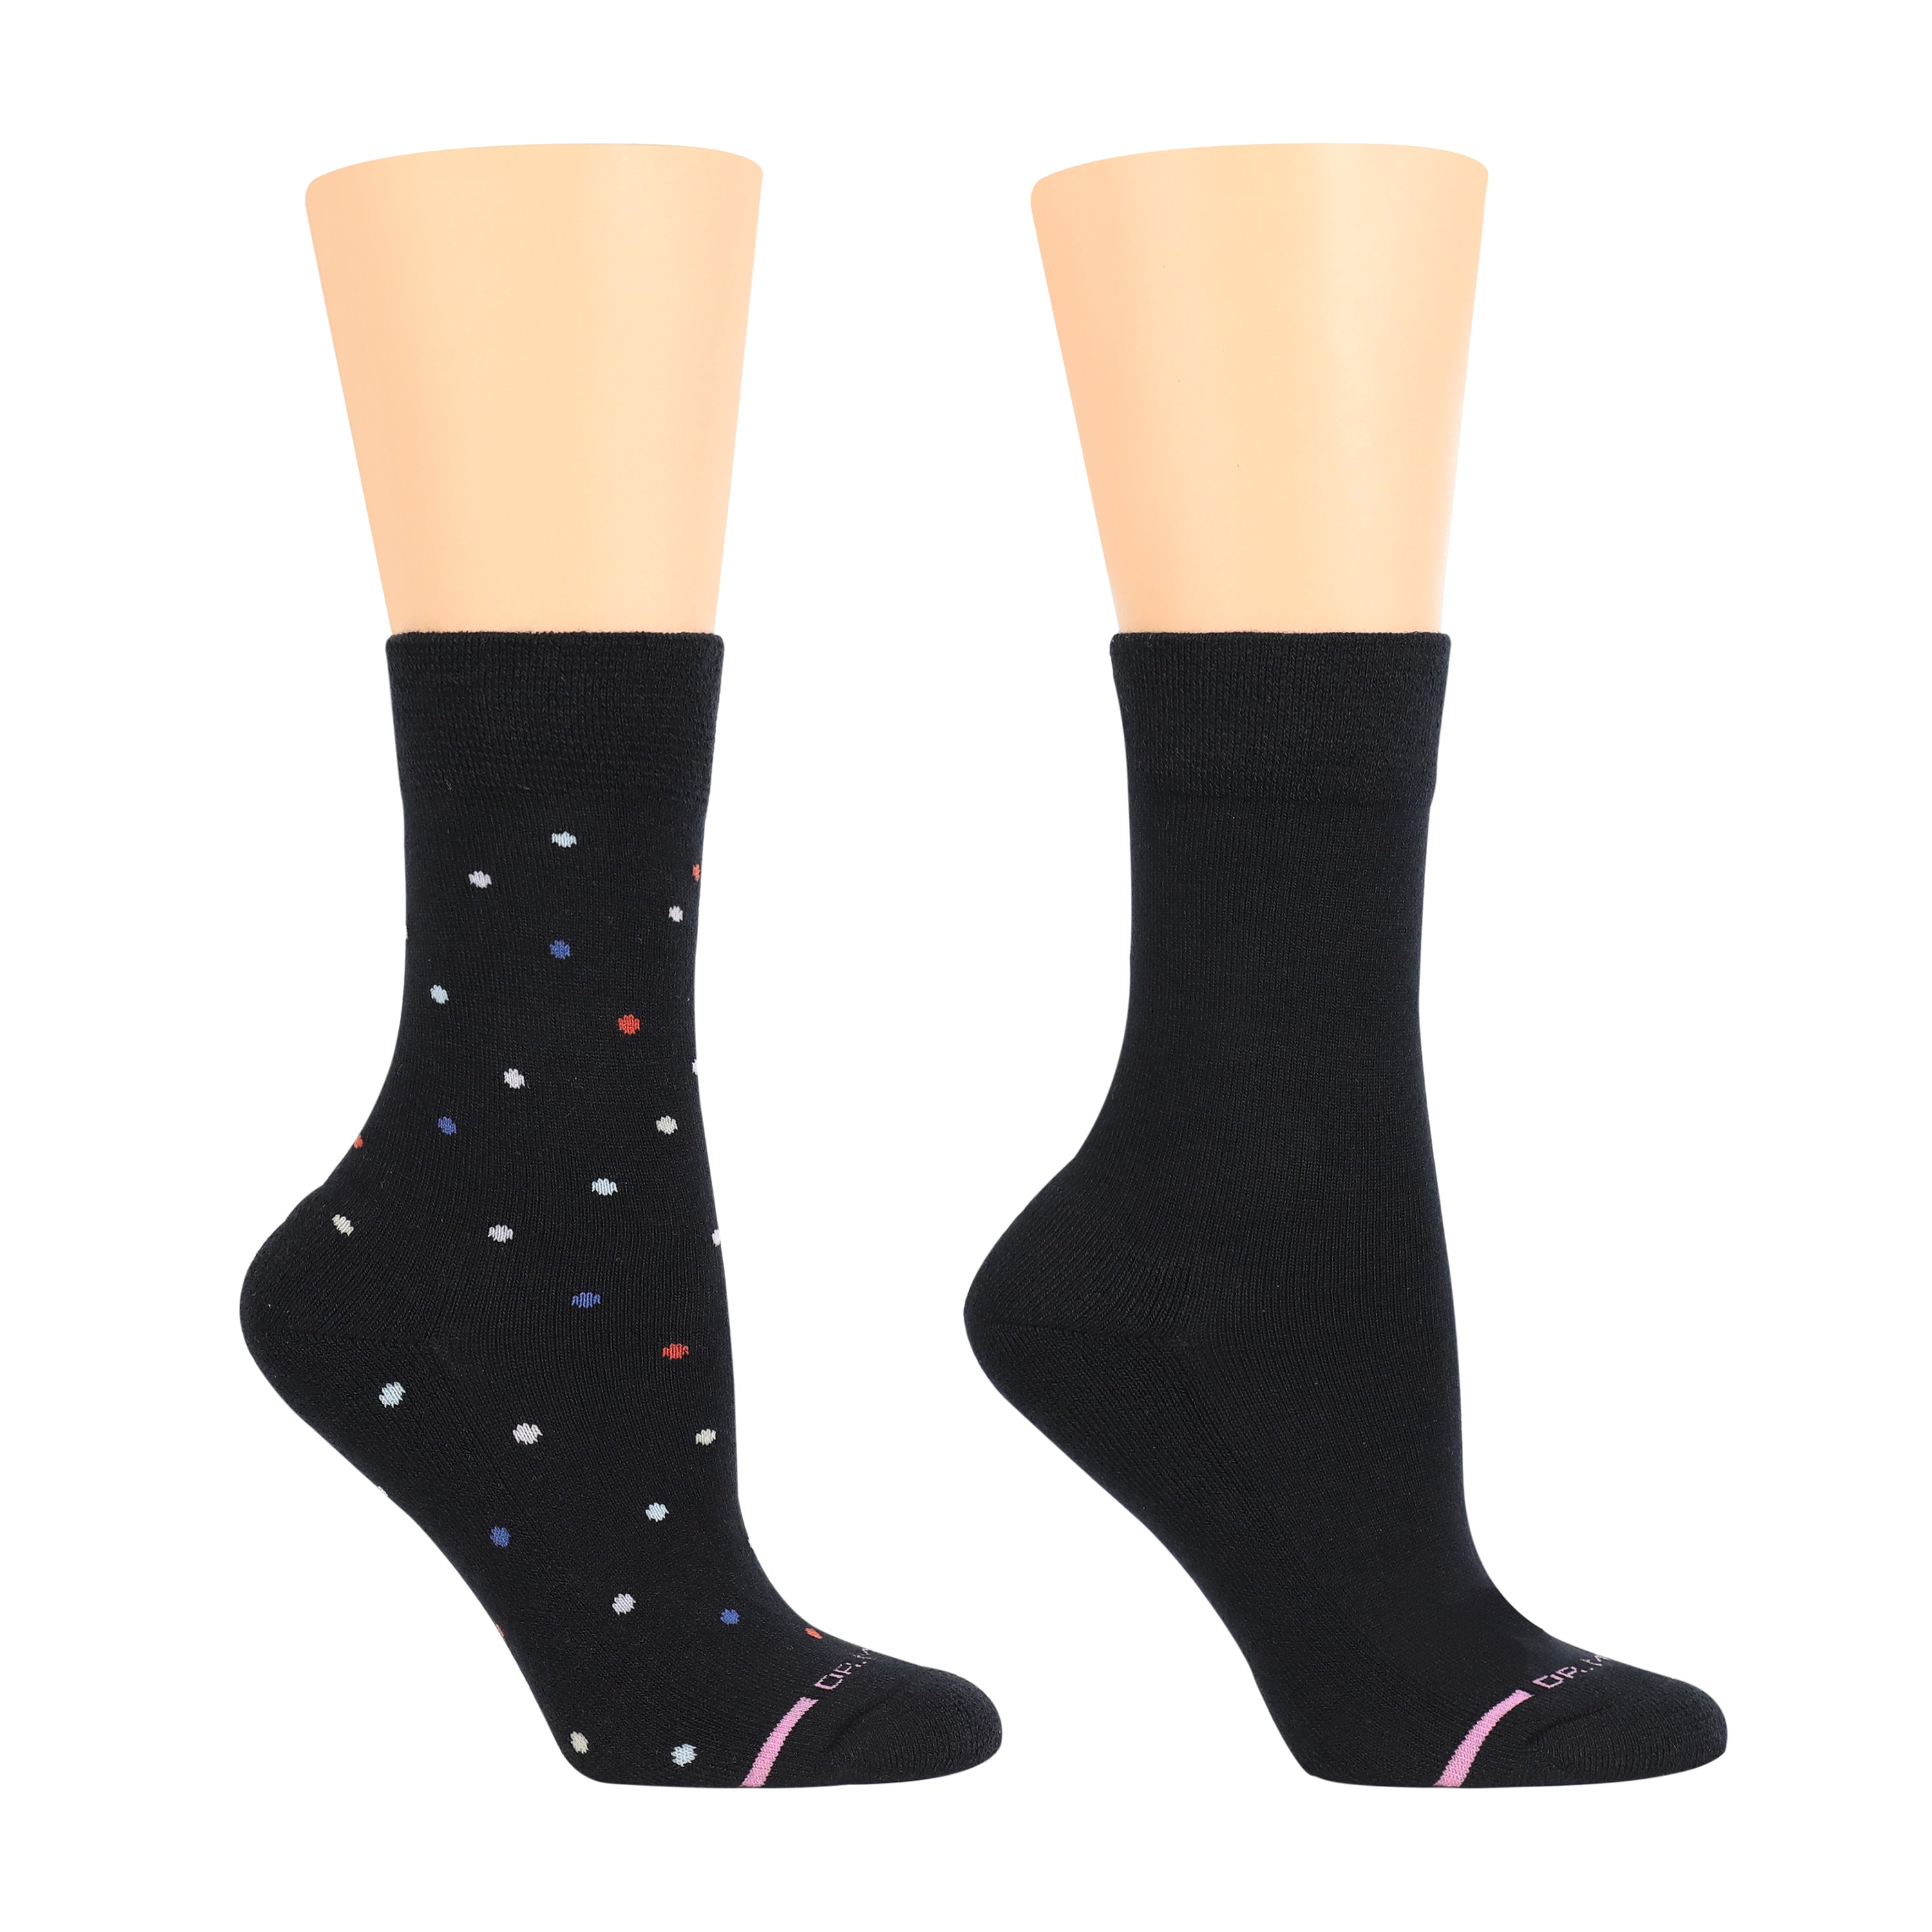 Multidots | Comfort Top Socks For Women